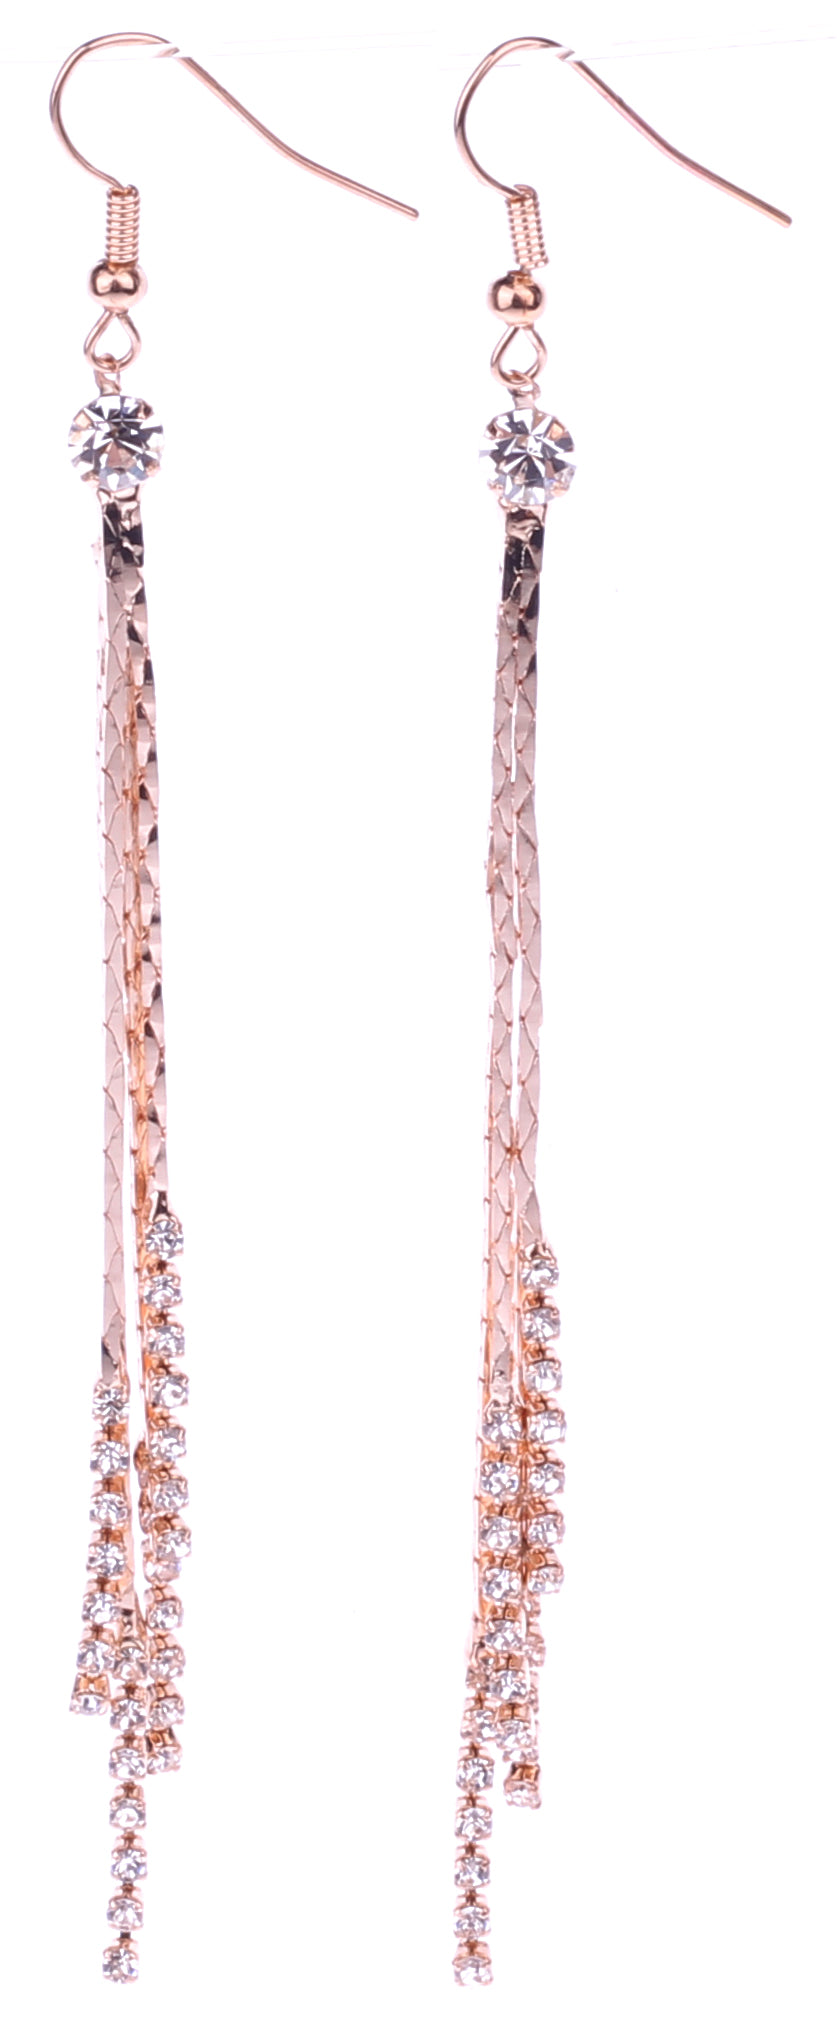 Chain earrings with rhinestones